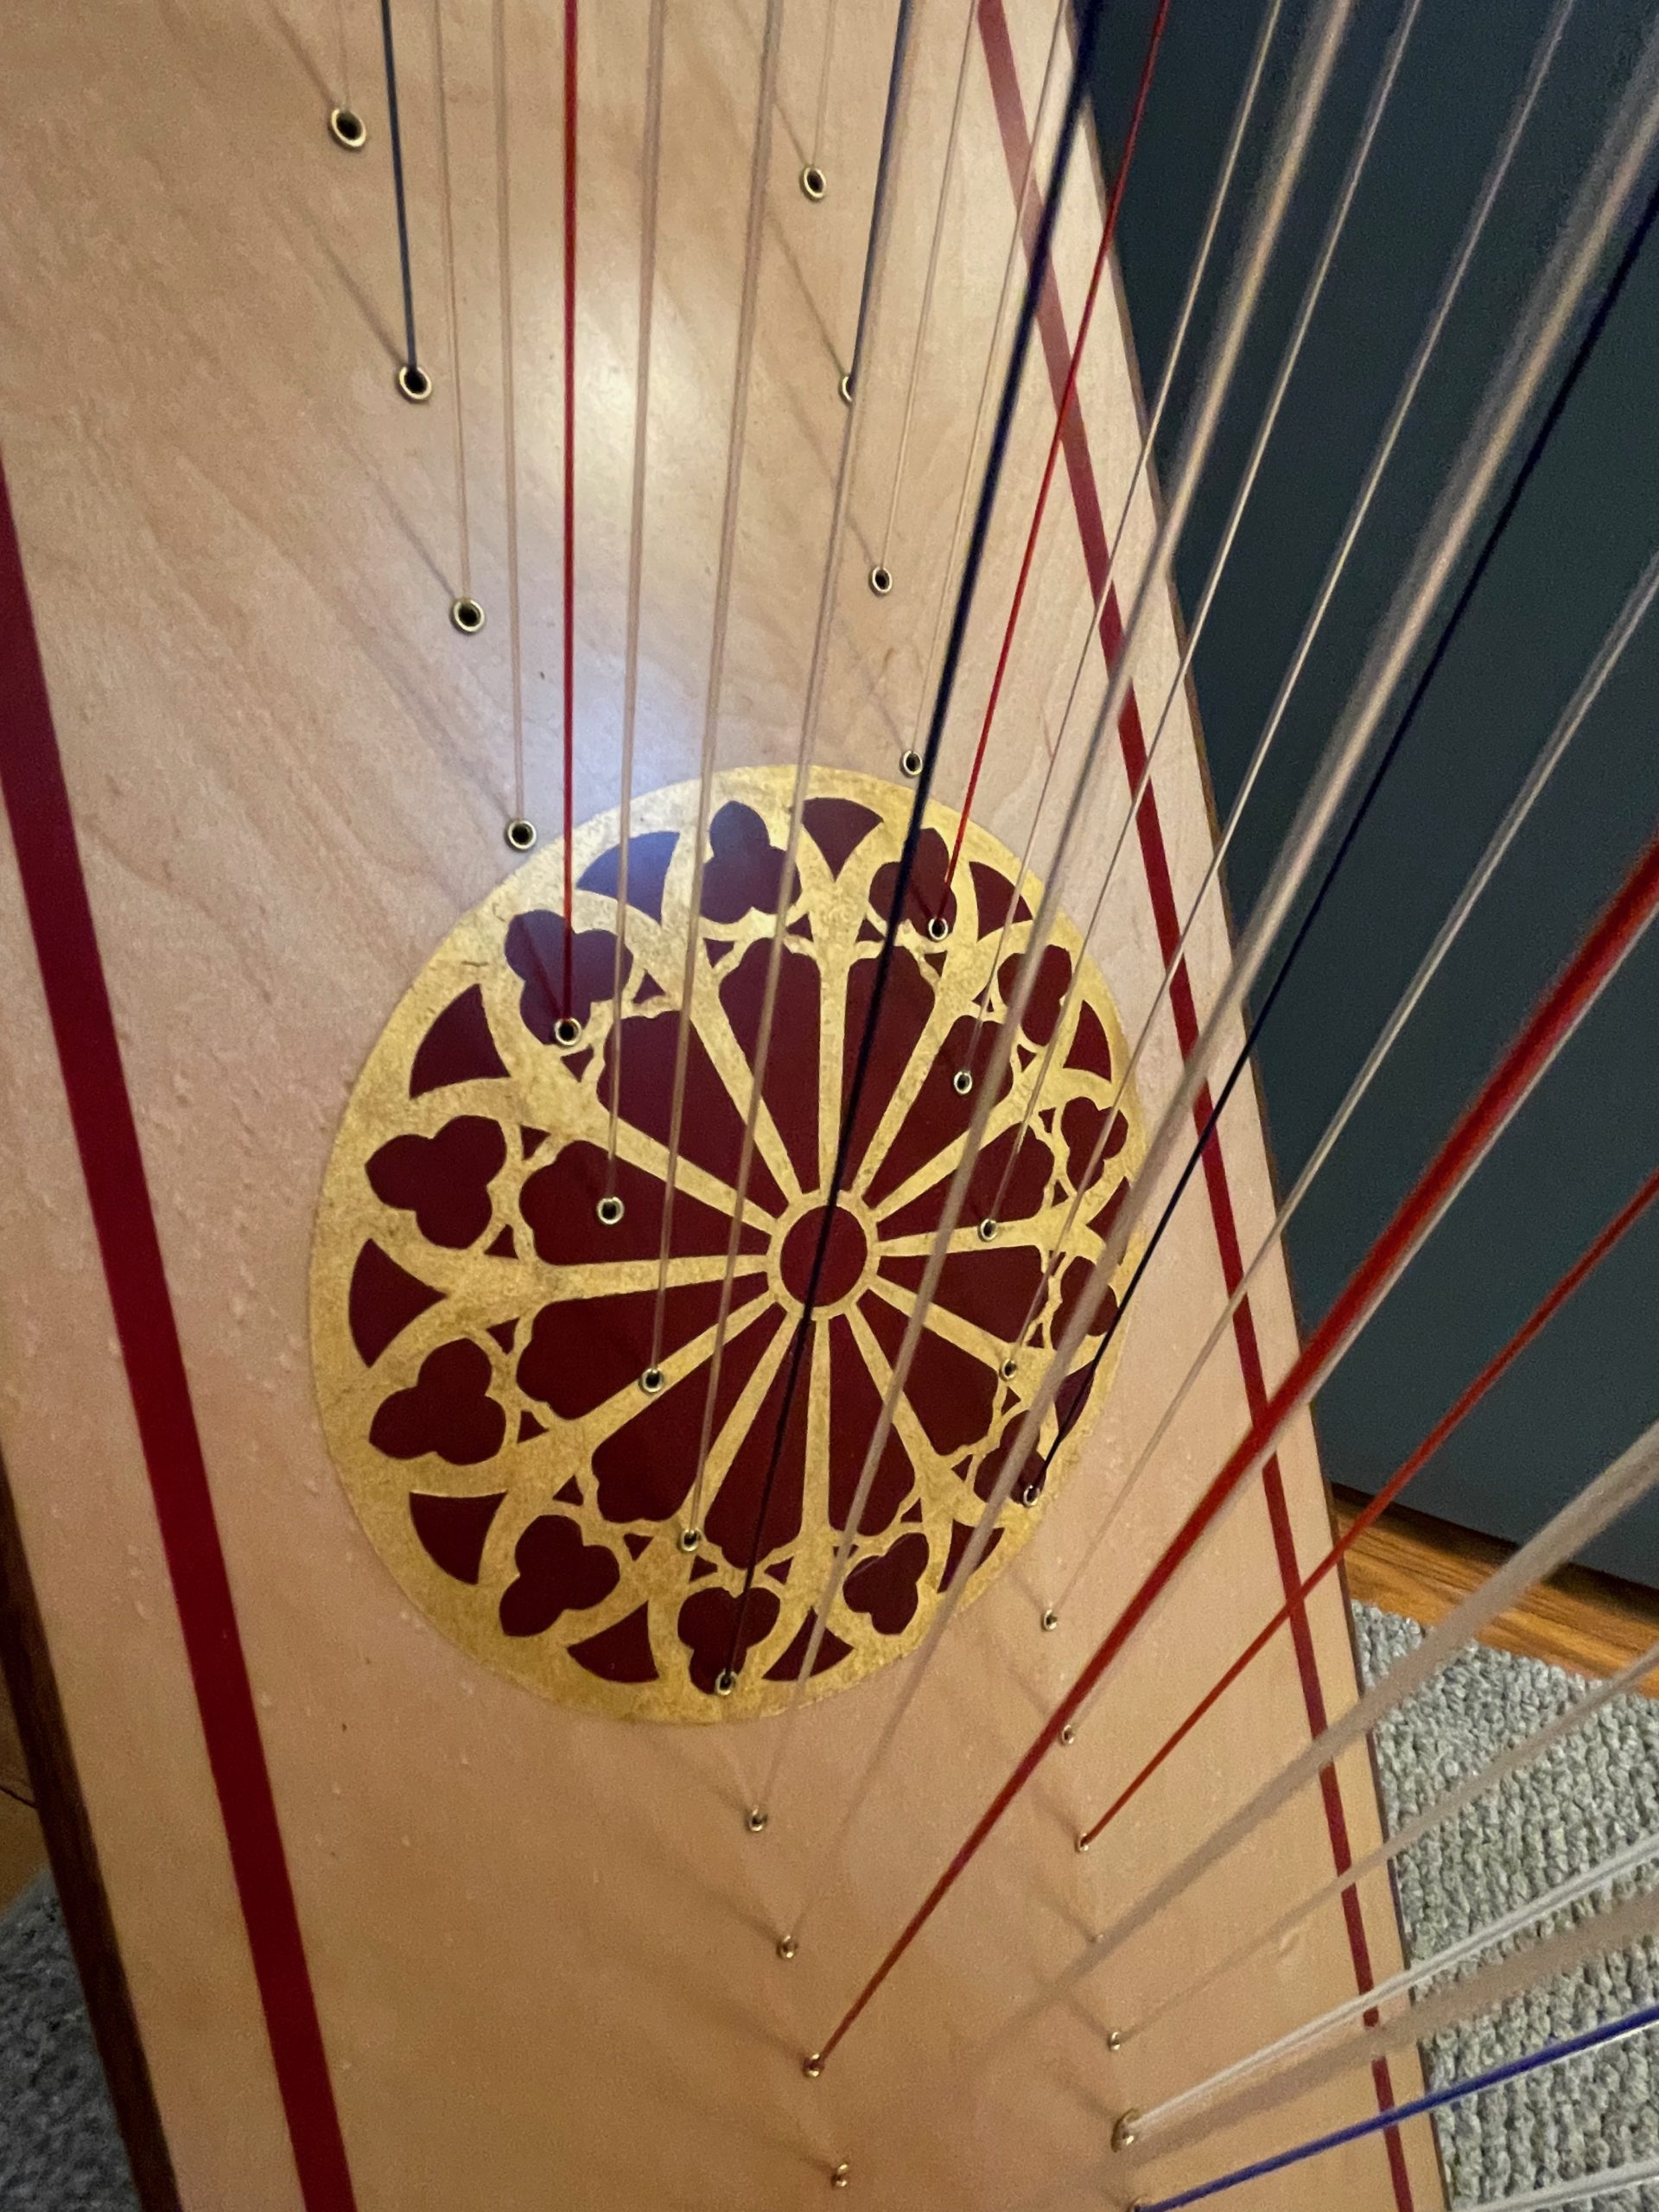 Rees Double Morgan Meghan double-strung harp closeup of soundboard ornamentation